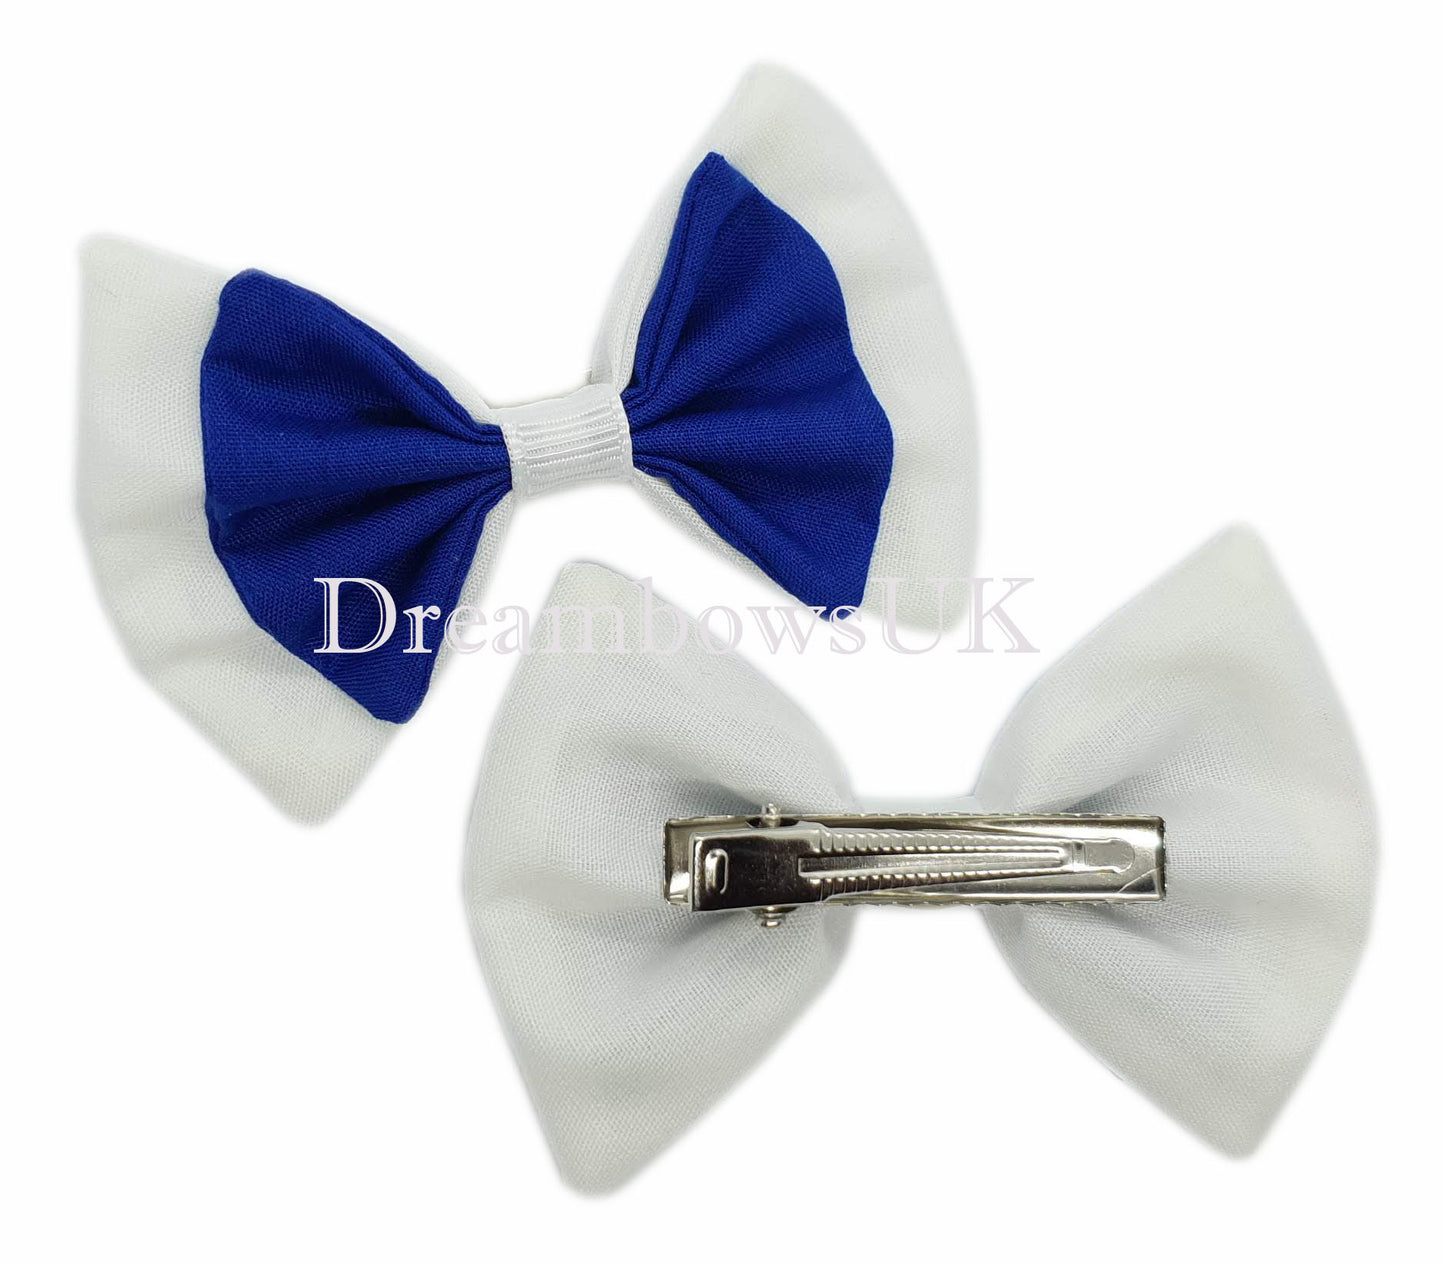 2x Royal blue and white fabric hair bows